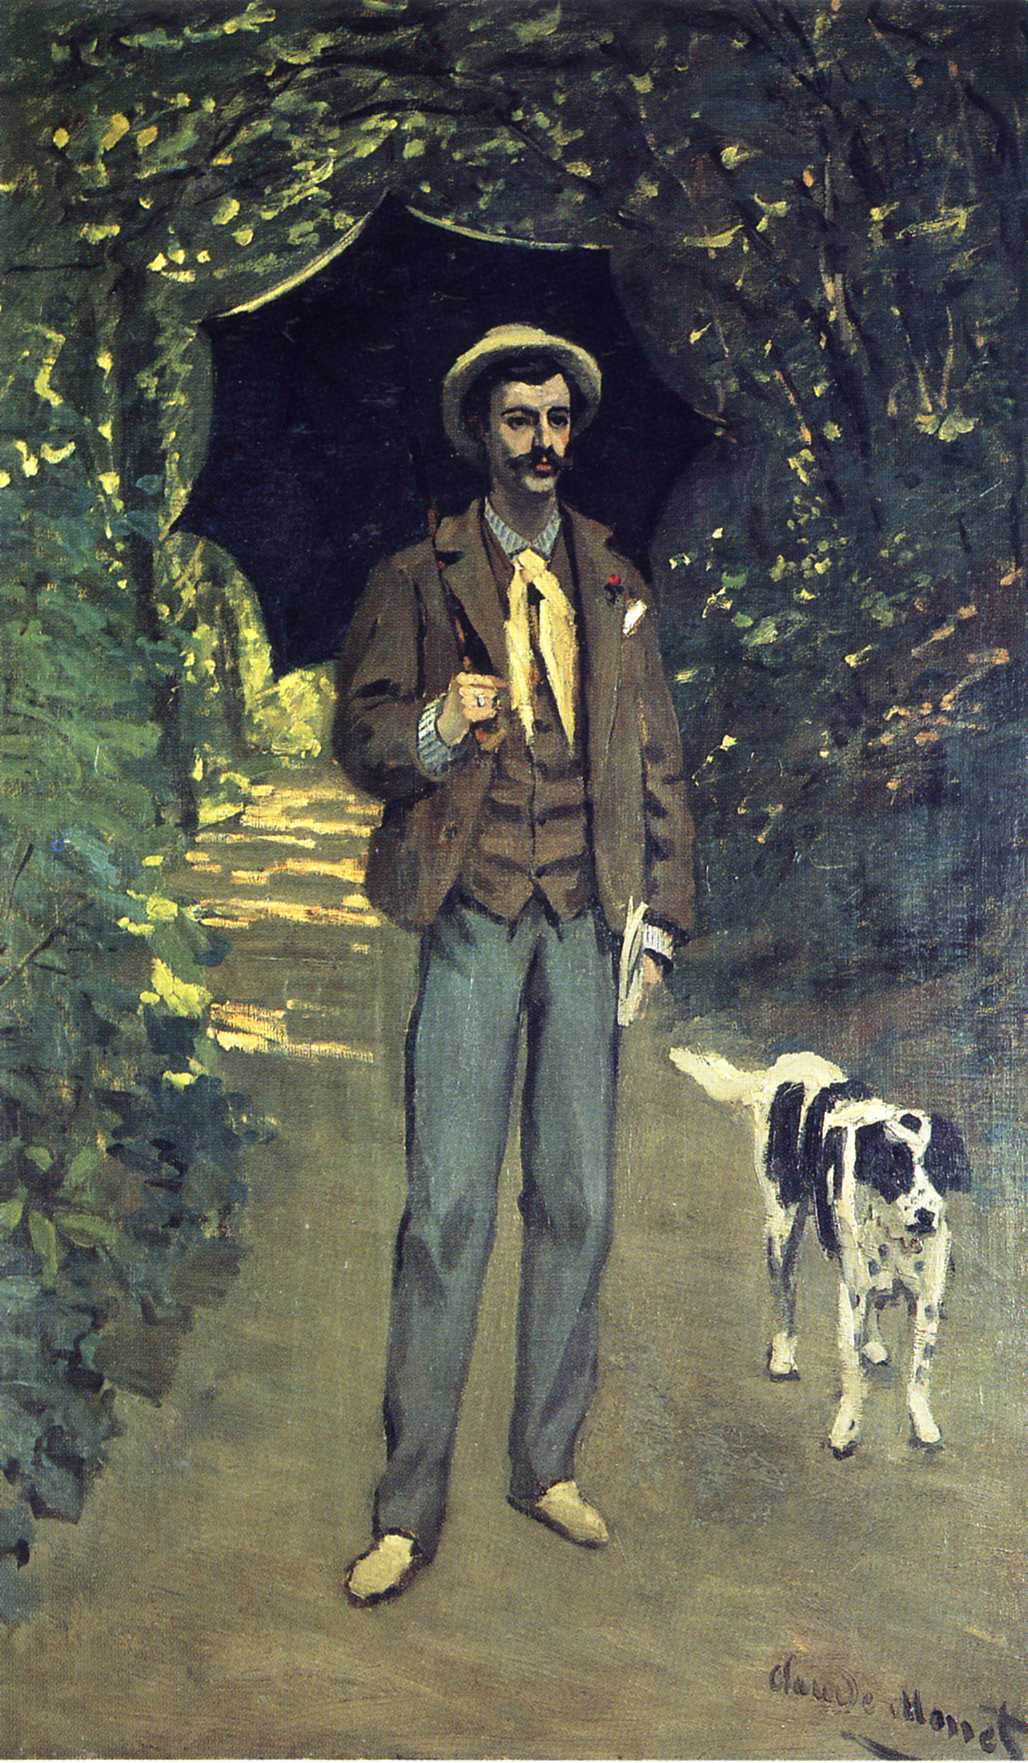 Victor Jacquemont Holding a Parasol 1865